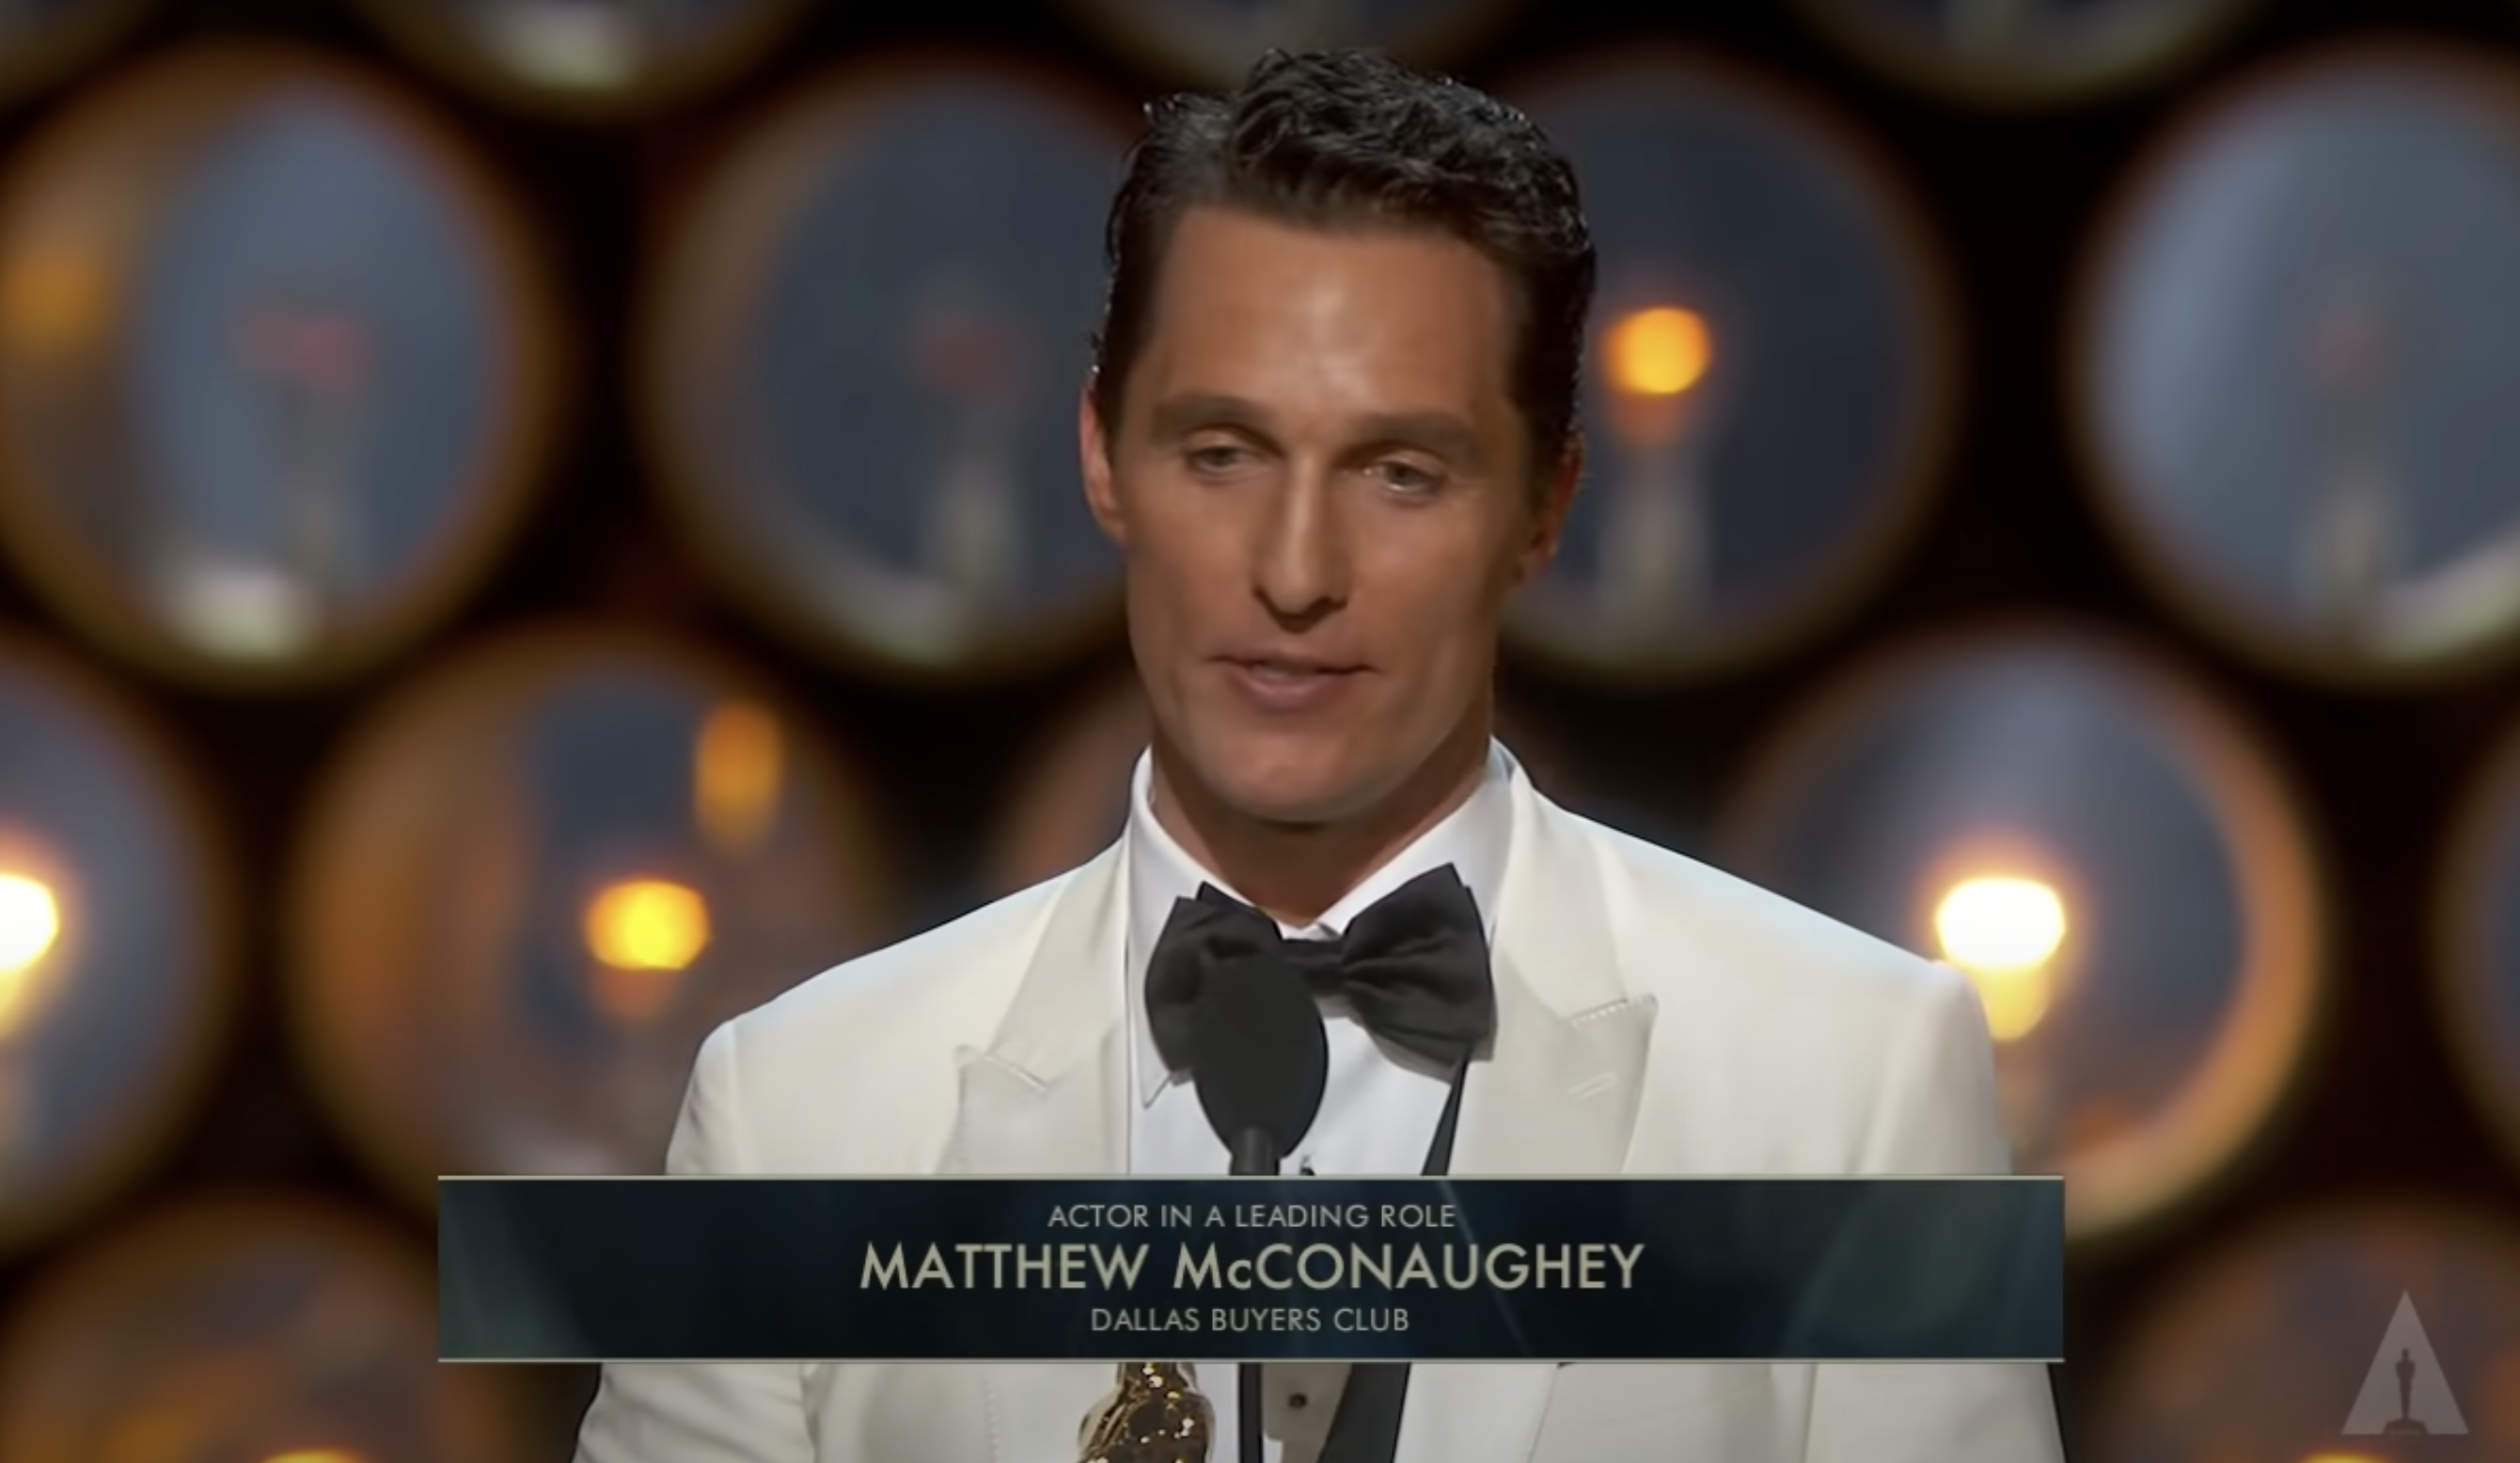 Matthew winning his Oscar